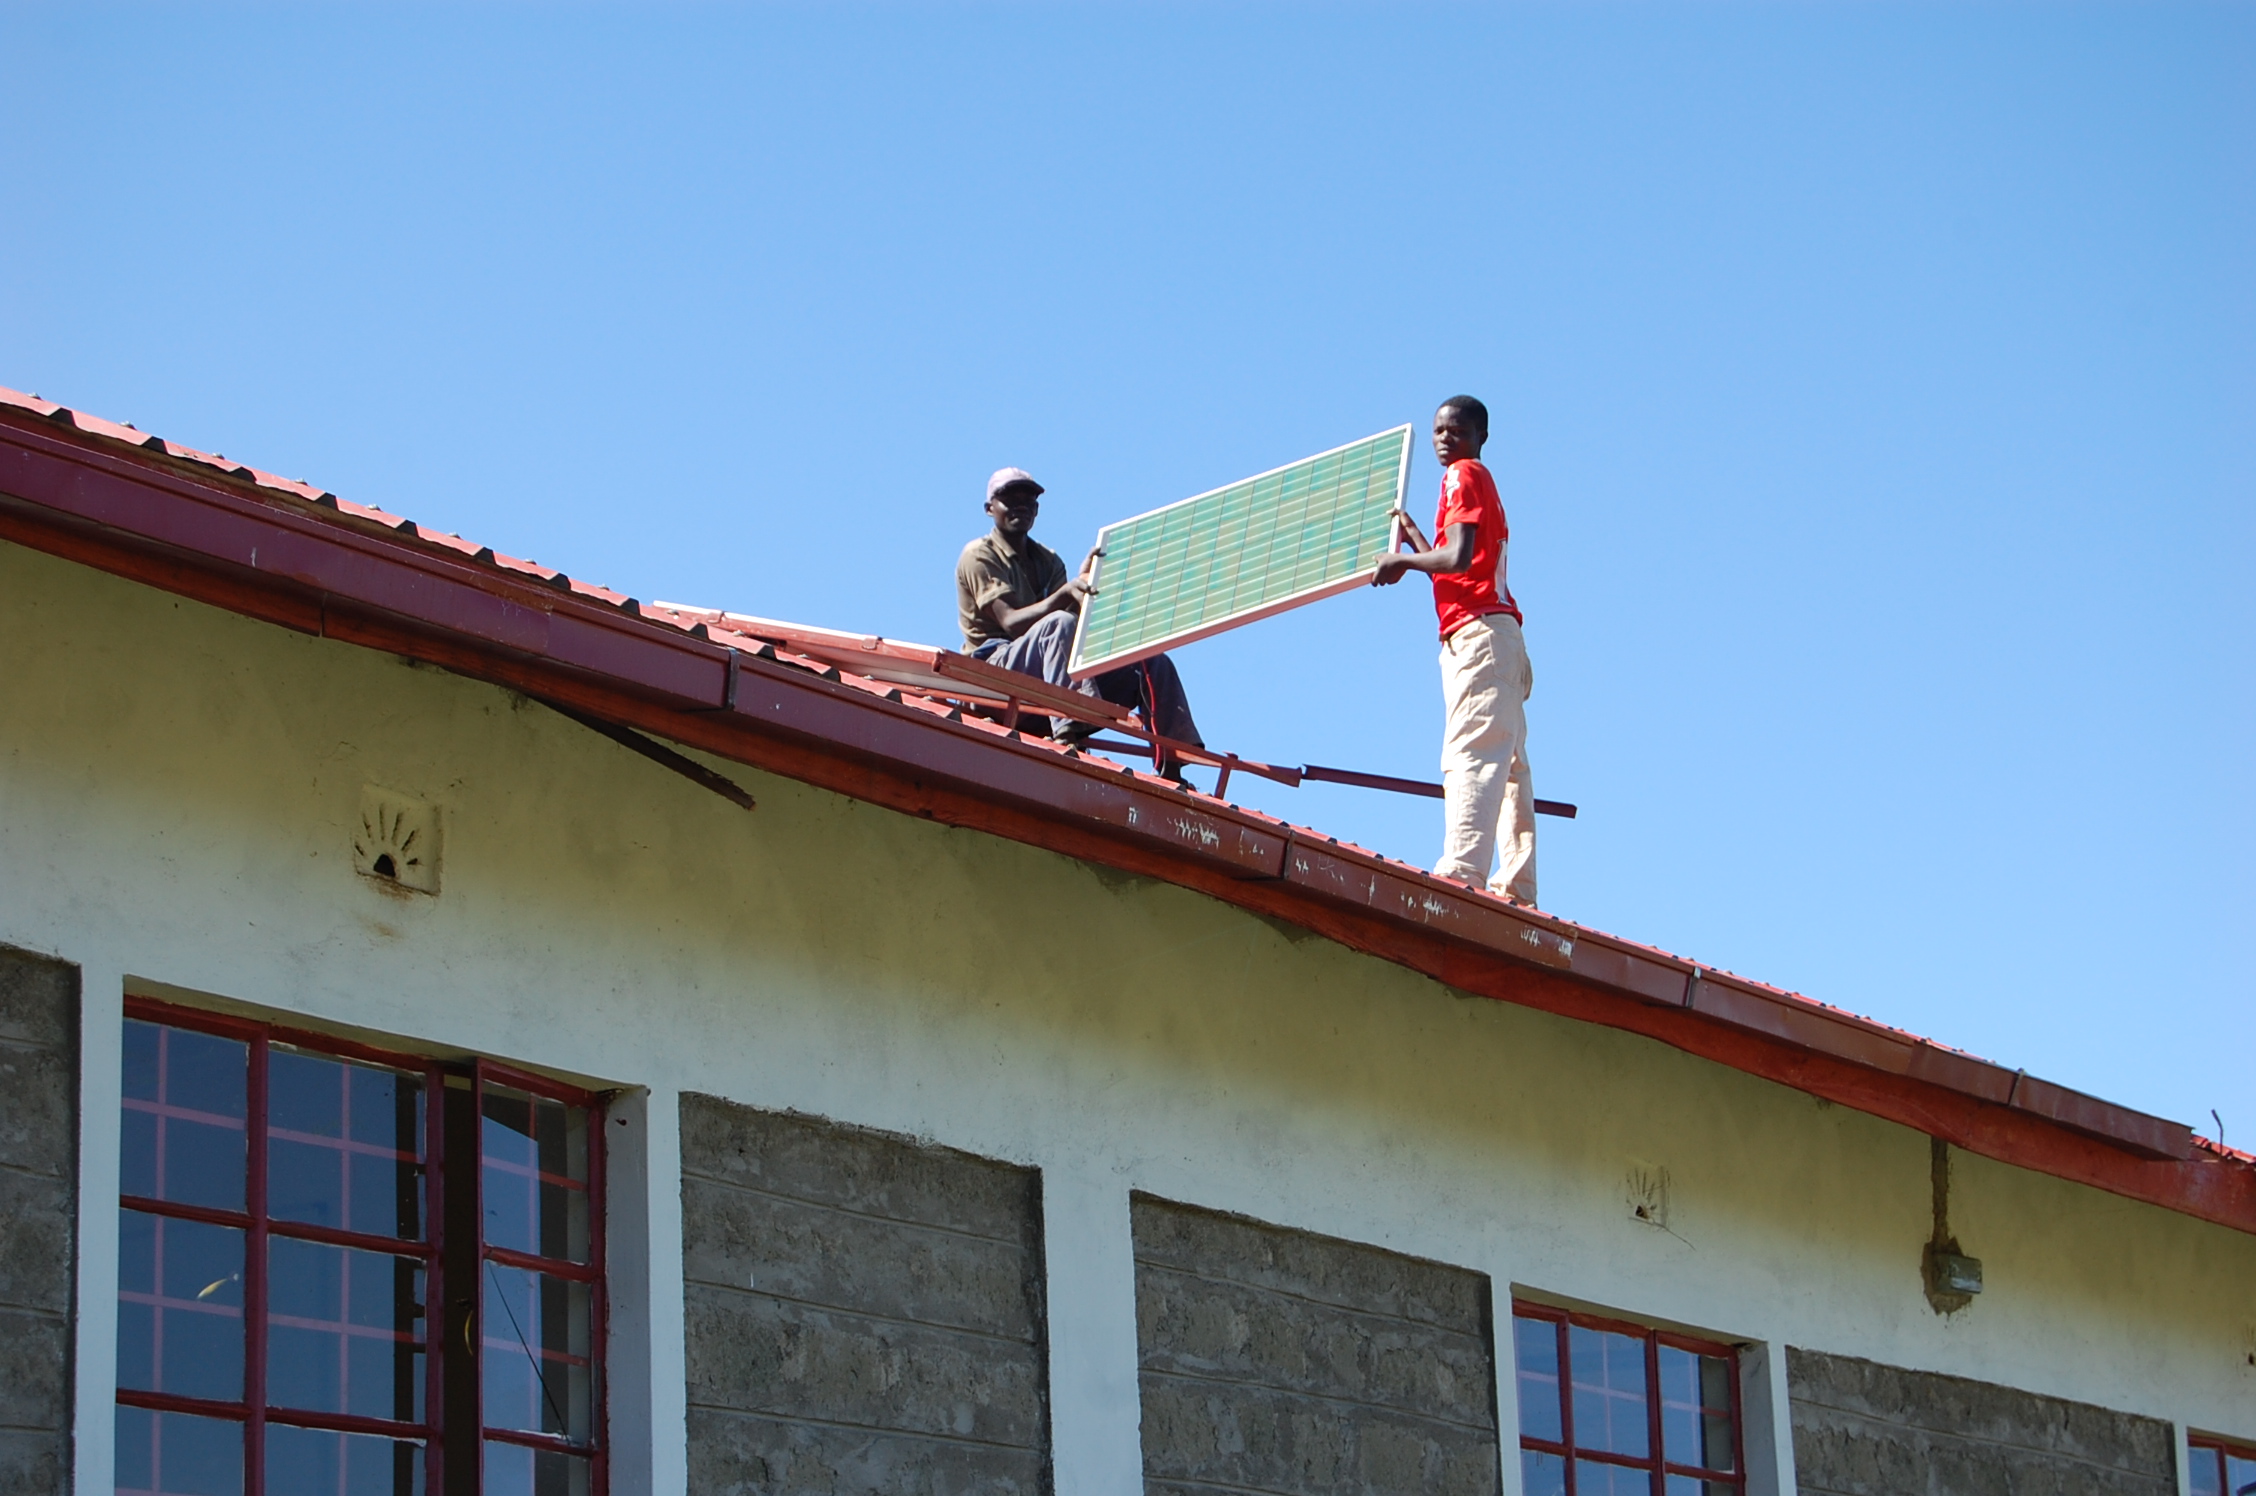 Installing solar panel on a JAMS building